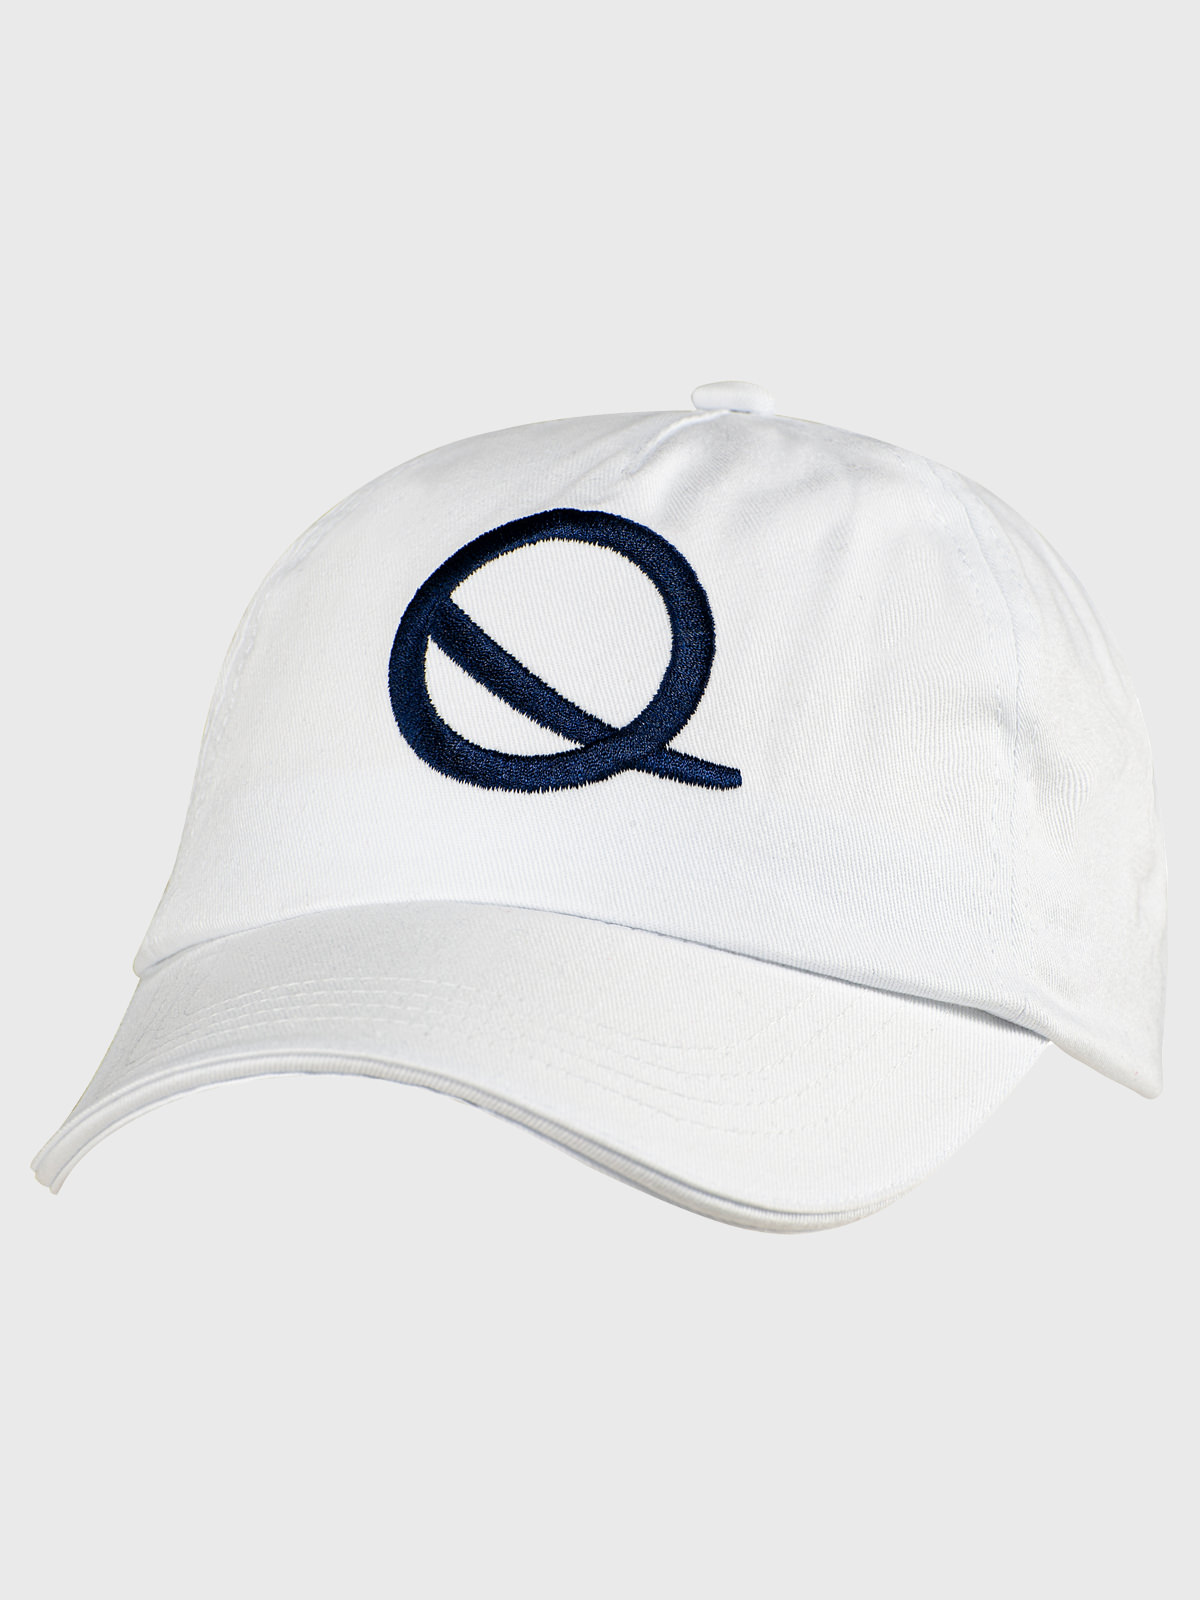 EQODE BASEBALL CAP WITH Q LOGO 2